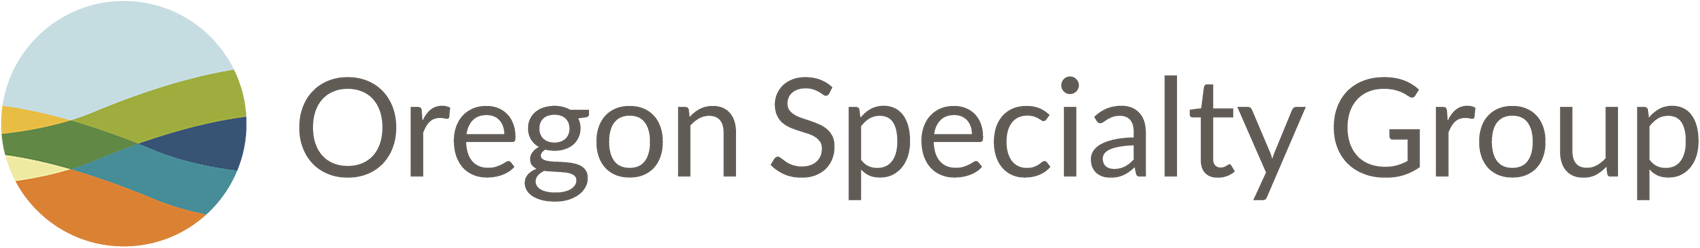 Oregon Specialty group logo.